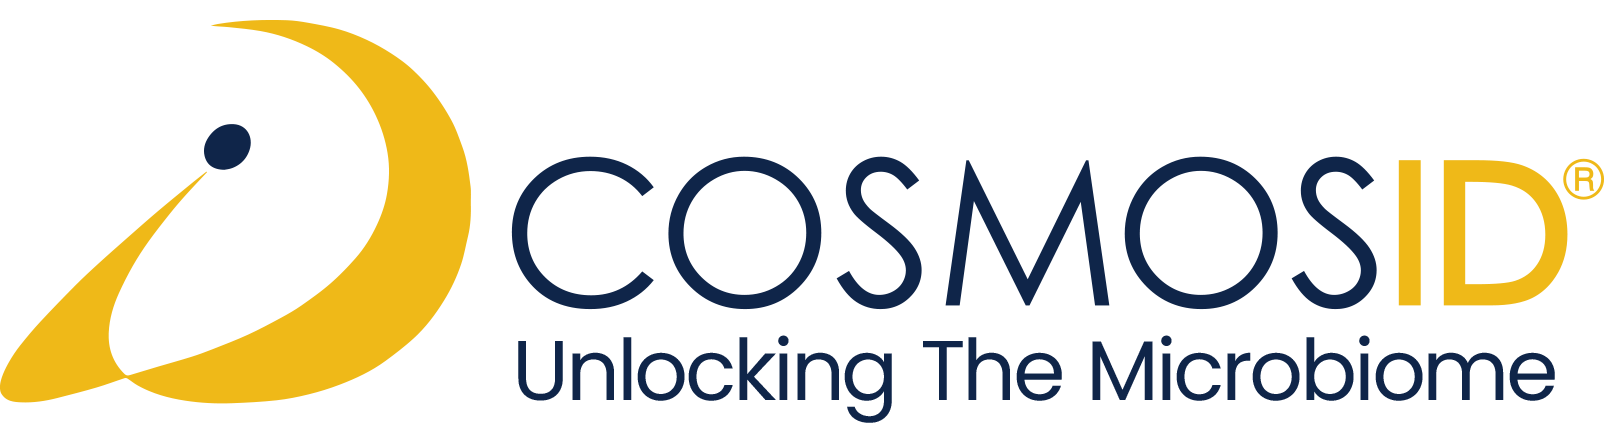 CosmosID_logo_tagline